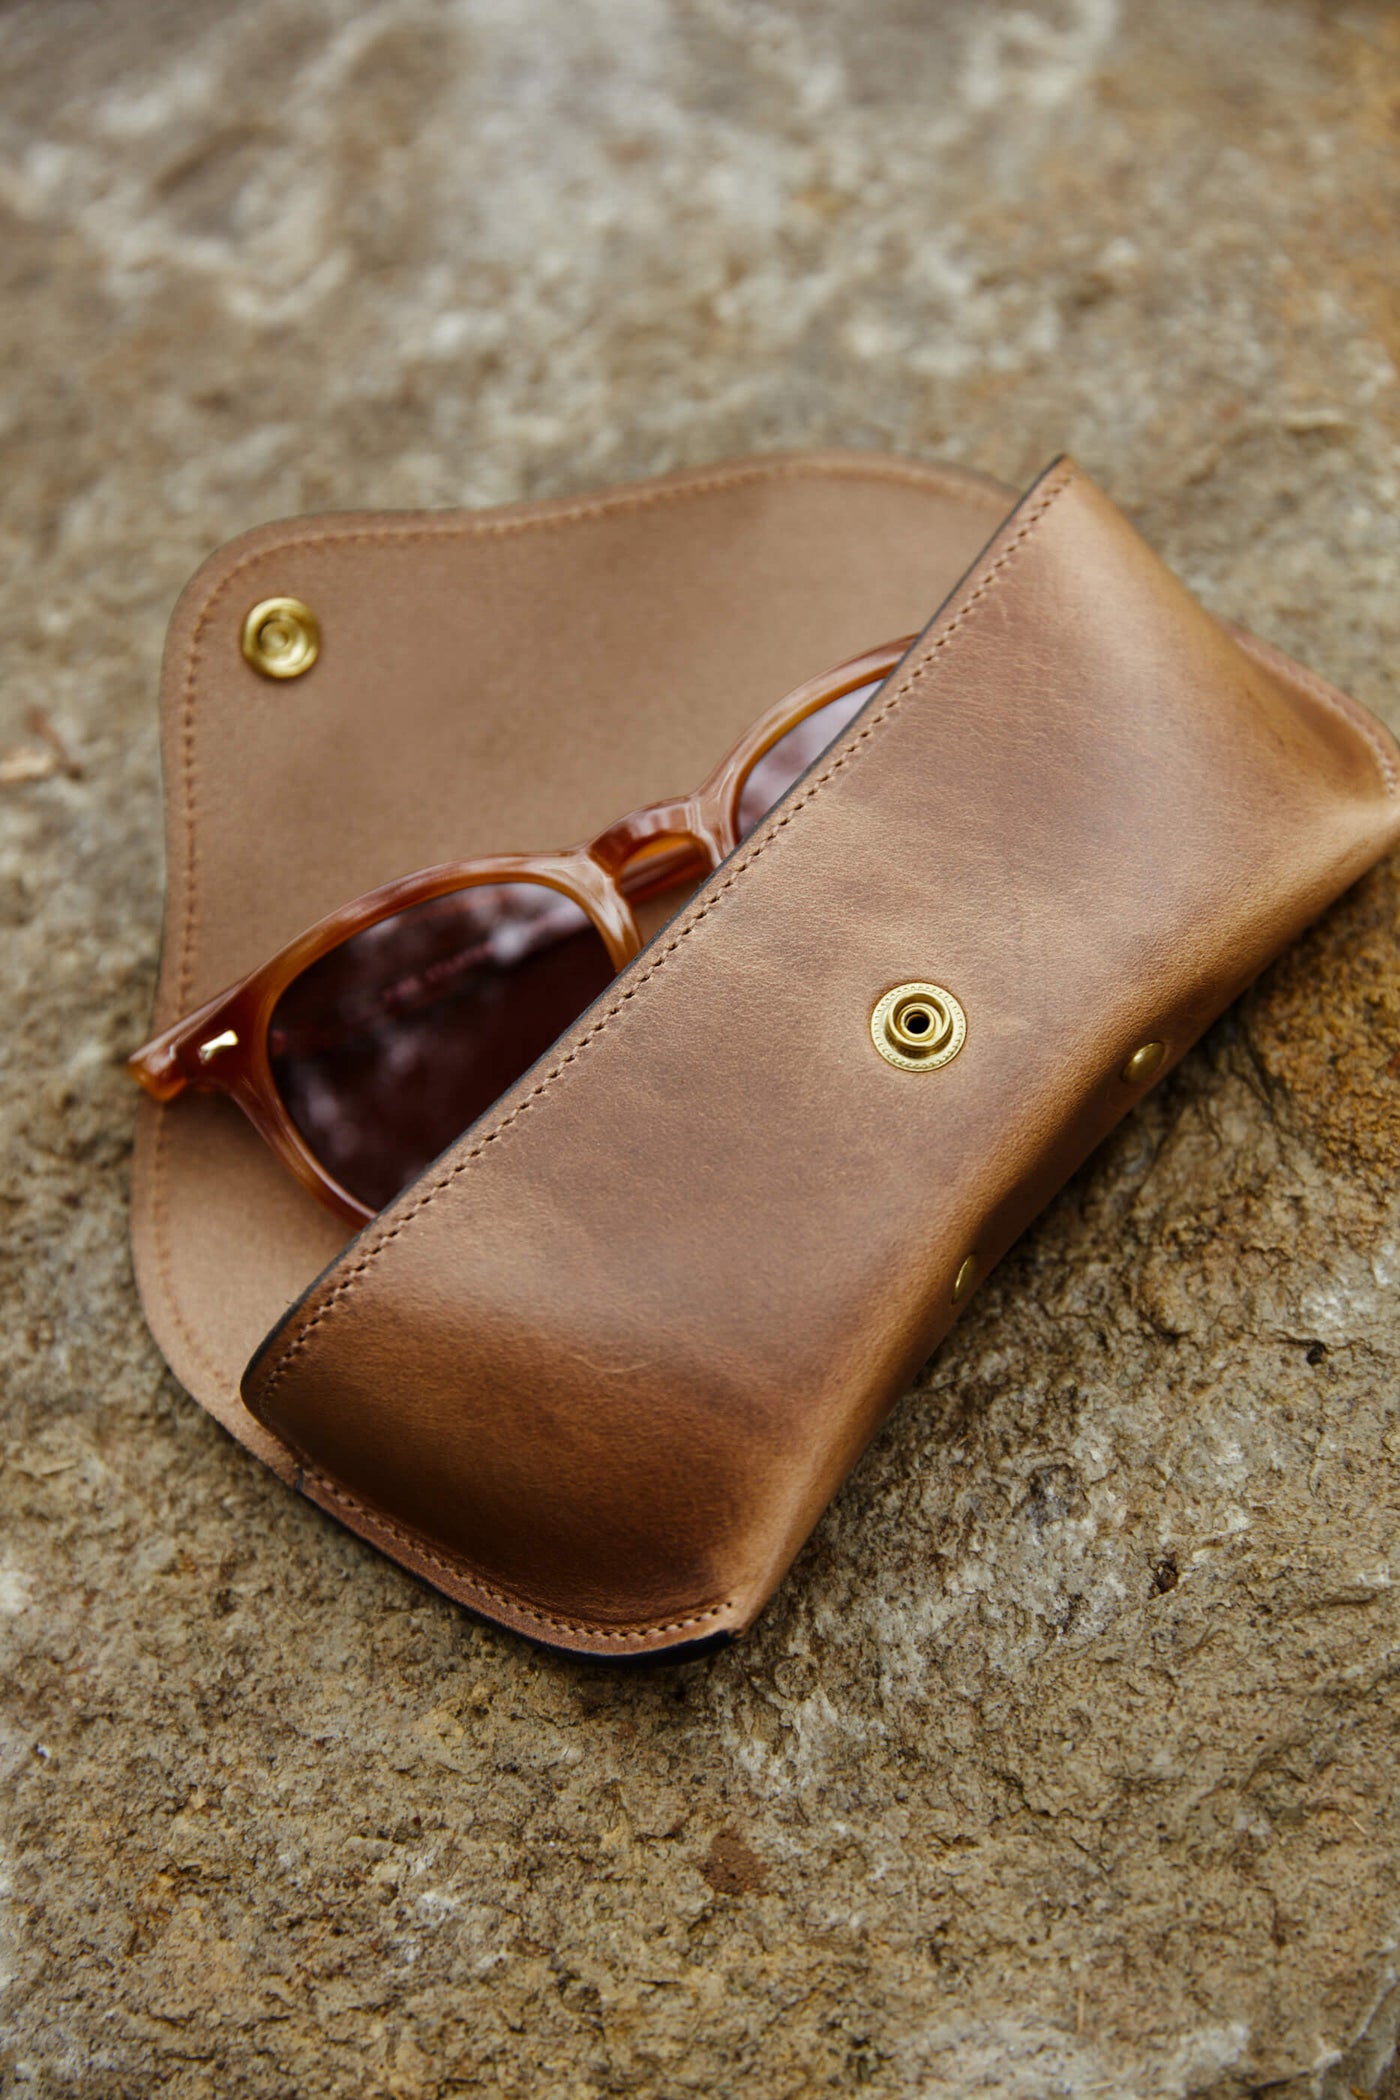 The Leather Sunglass Case